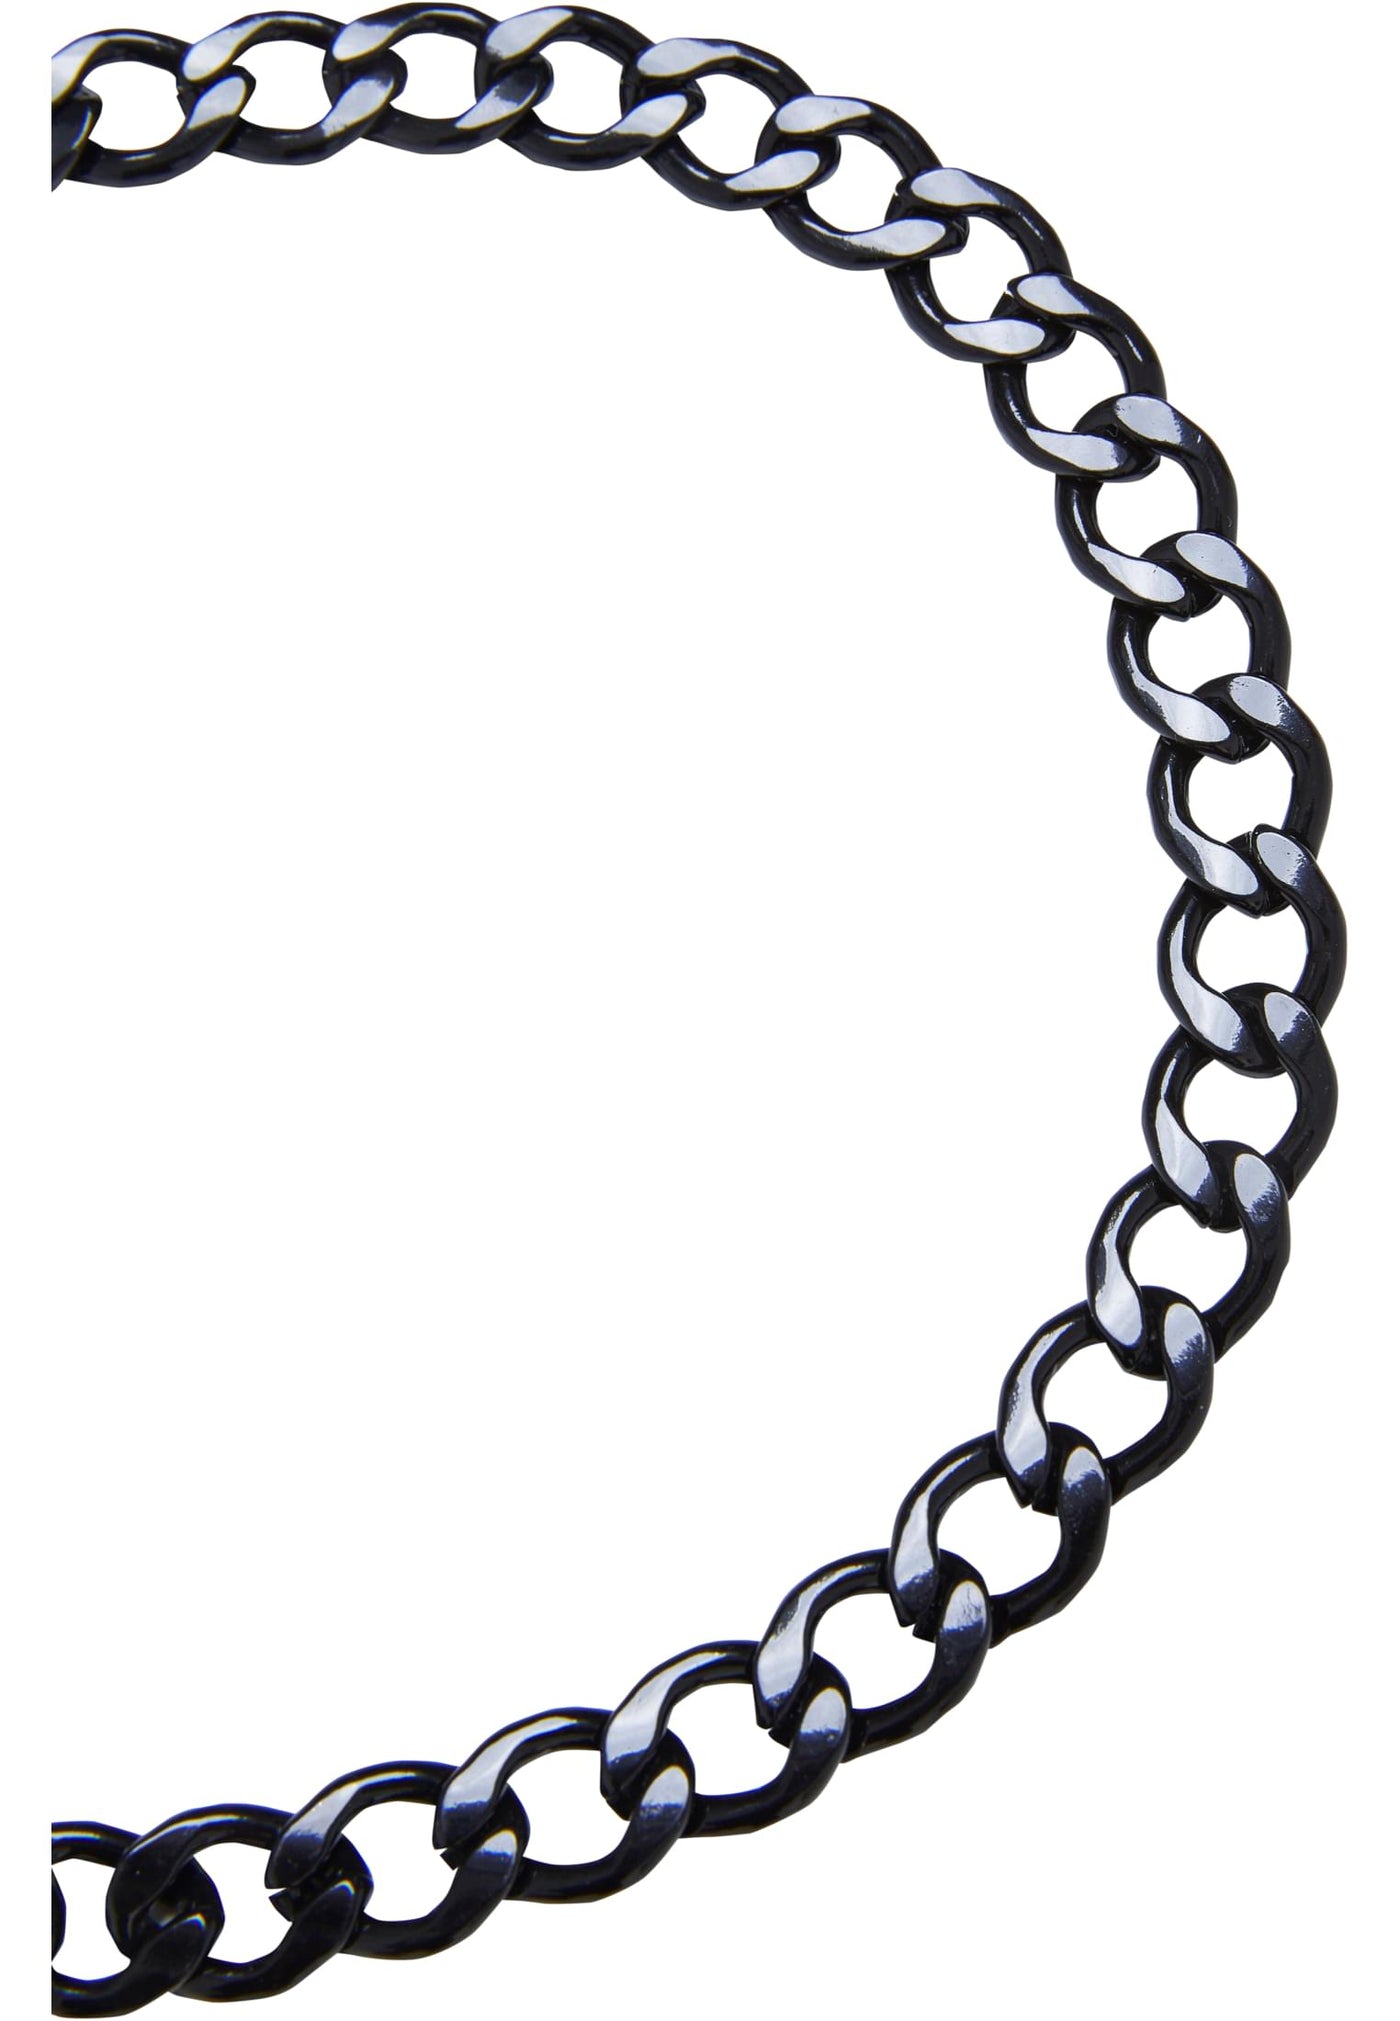 Urban Classics 3891 Big Chain Necklace - Black